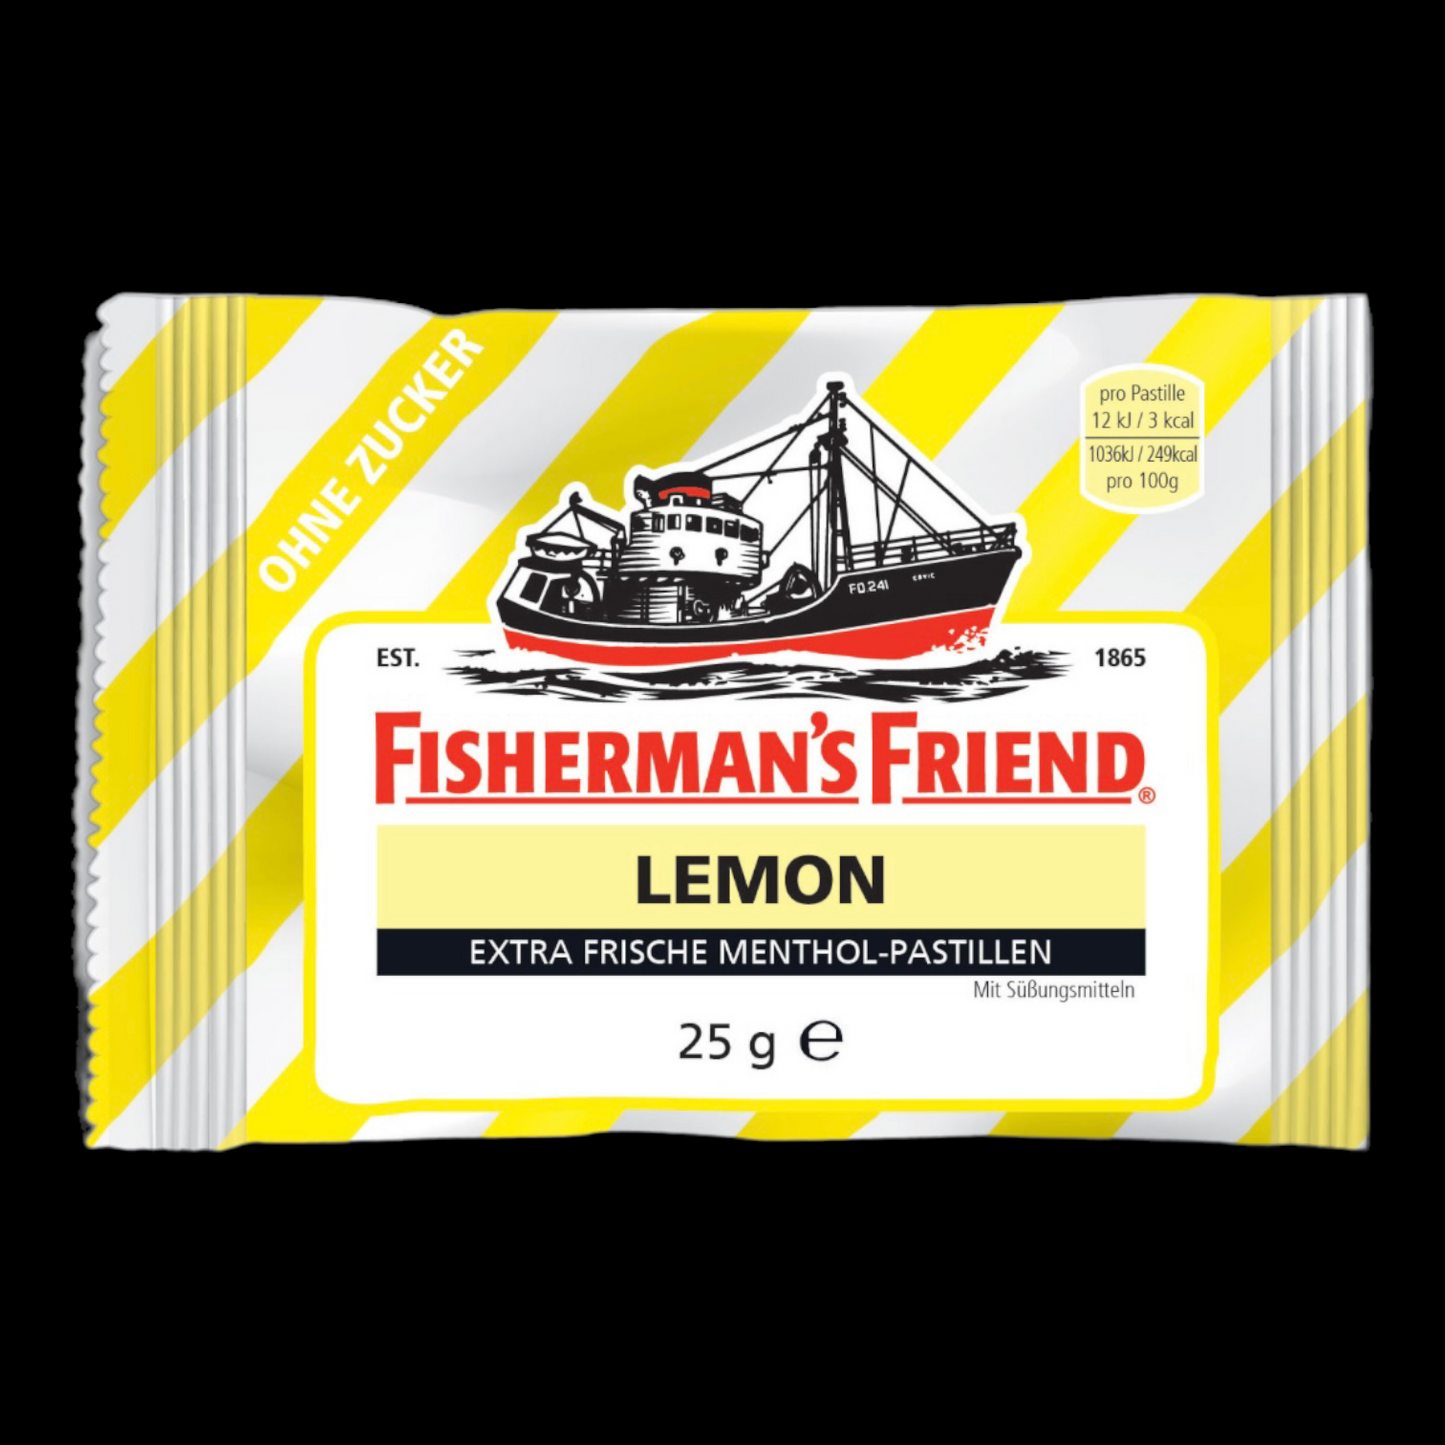 Fisherman's Friend Lemon ohne Zucker 25g